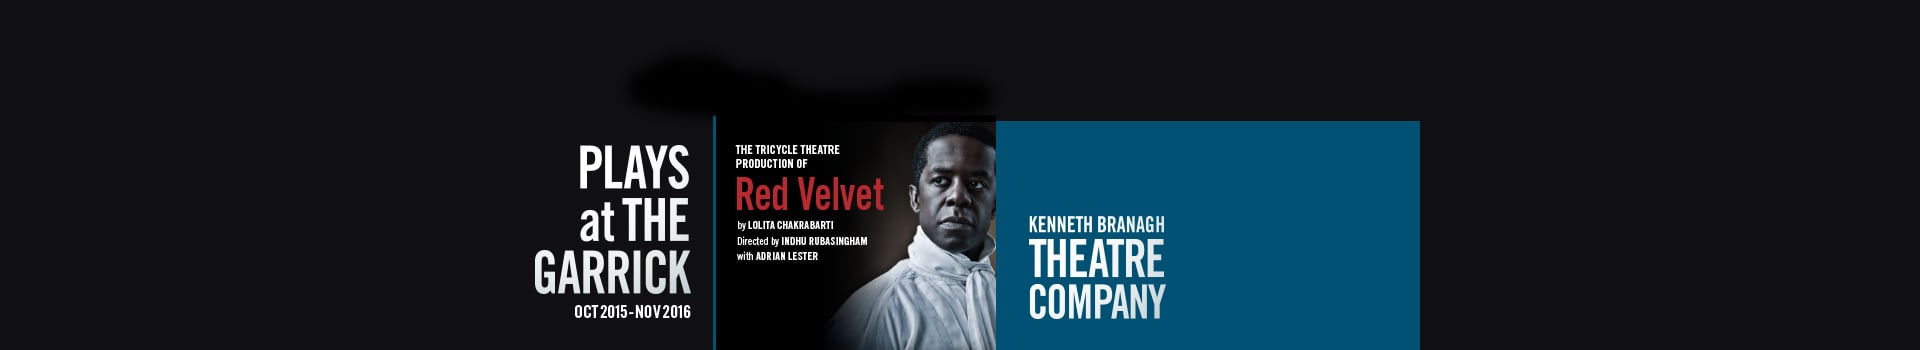 Red Velvet tickets starring Adrian Lester Garrick Theatre Branagh Company